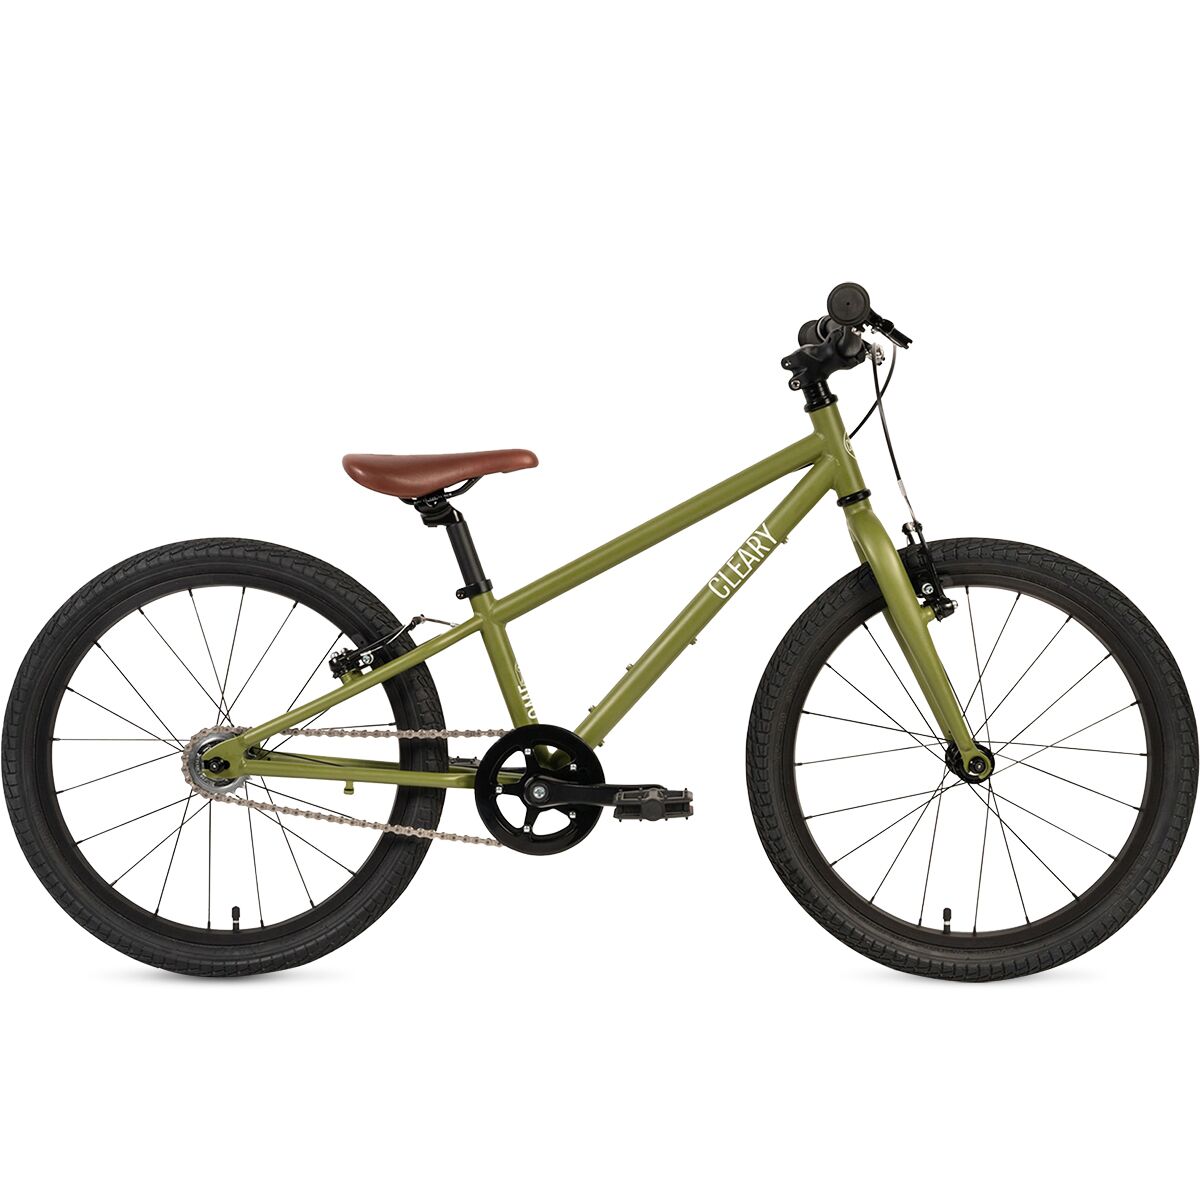 Cleary Bikes Owl 20in Single Speed Bike - Kids' Desert Green/Cream, One Size